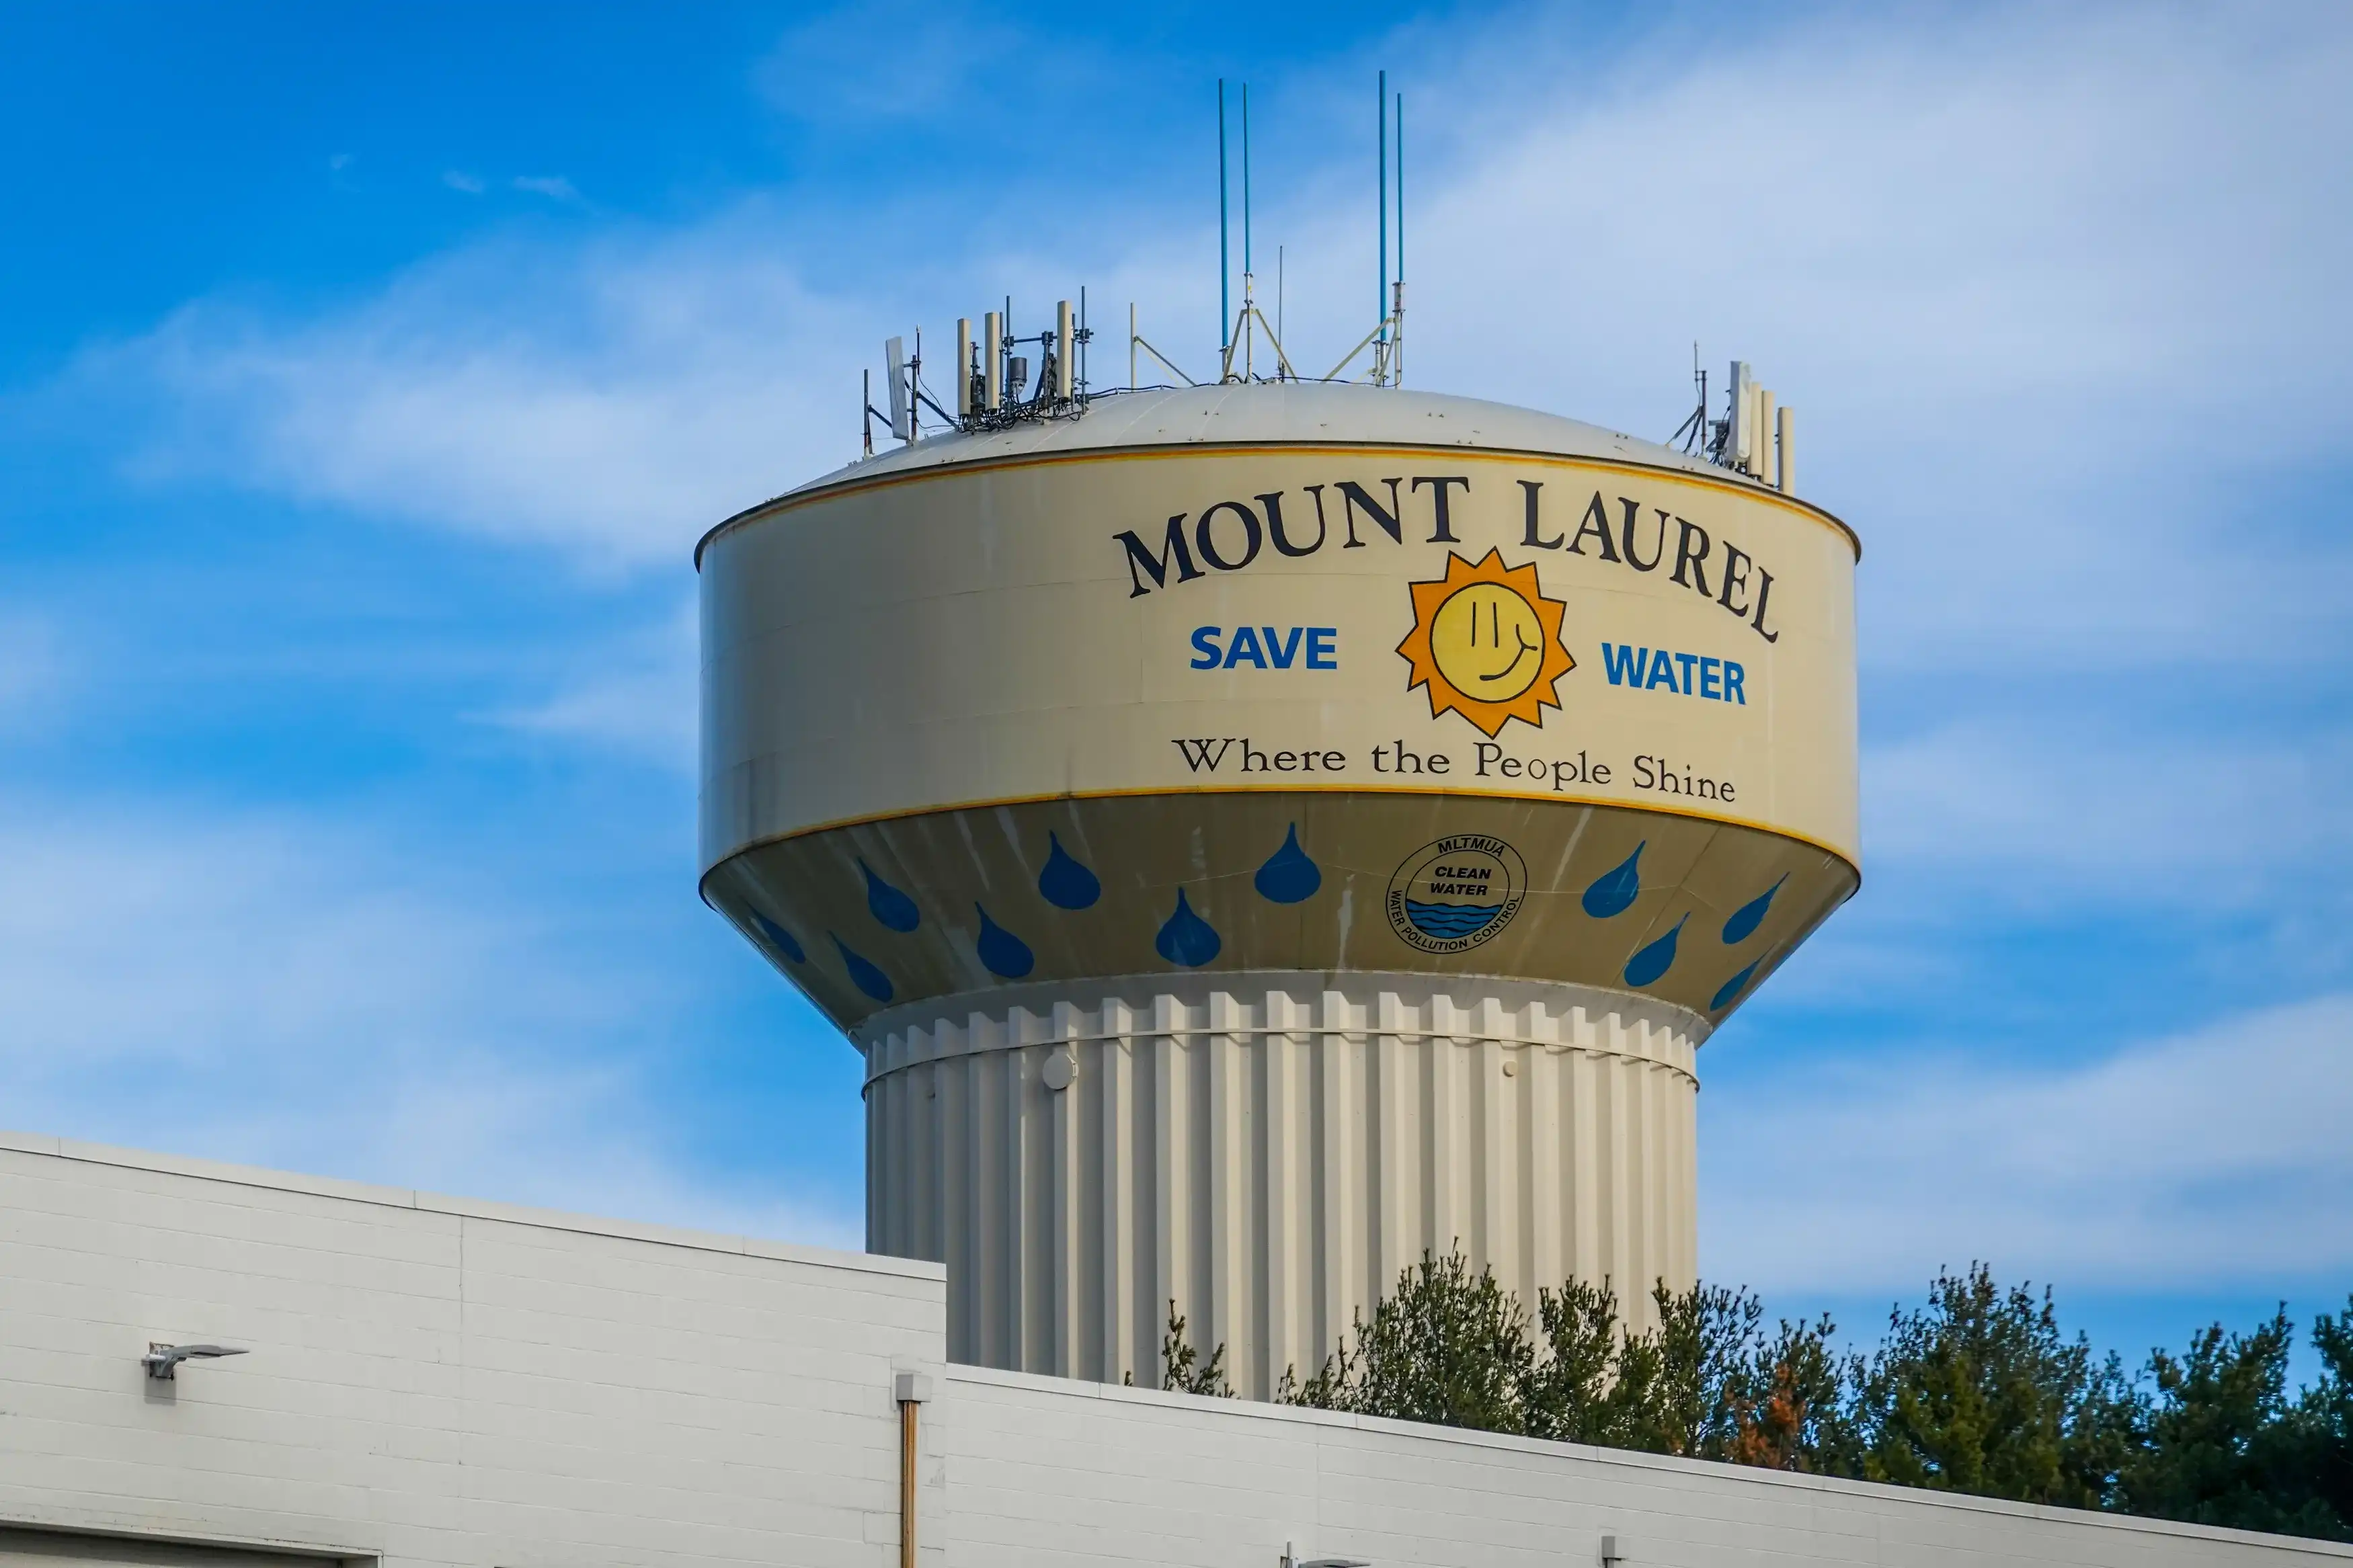 Best Mount Laurel hotels. Cheap hotels in Mount Laurel, New Jersey, United States